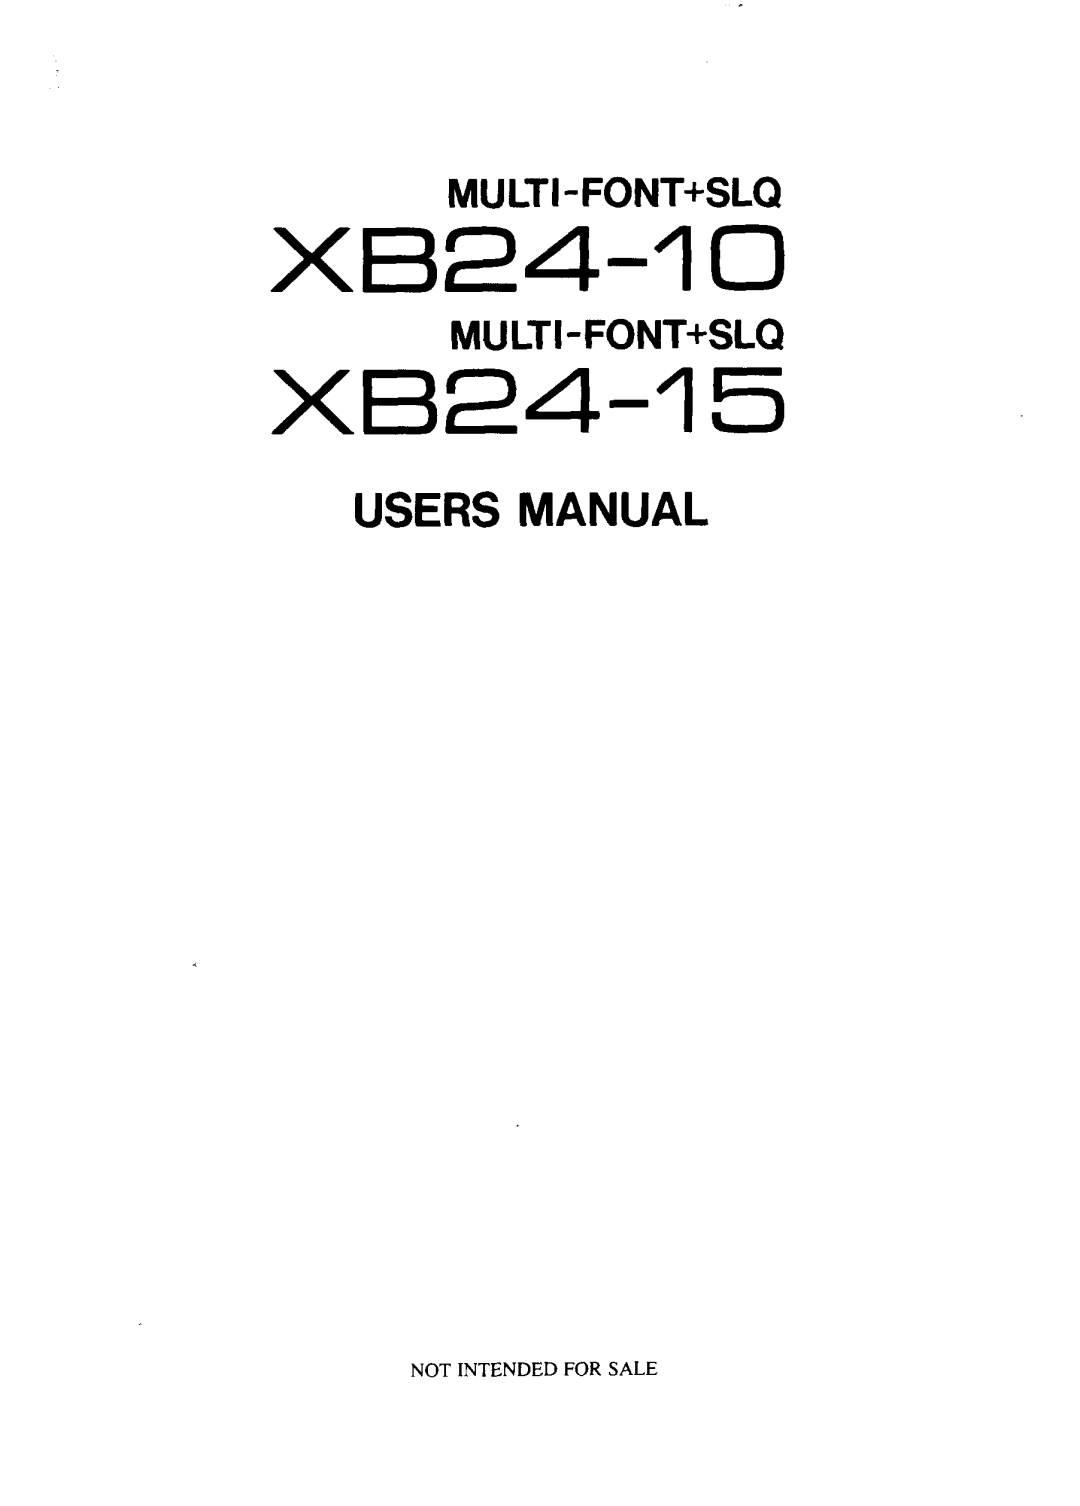 Star Micronics XB24-15, XB24-10 user manual Multi-Font+Slq, X624-10, X624-15, Users Manual, Not Intended For Sale 